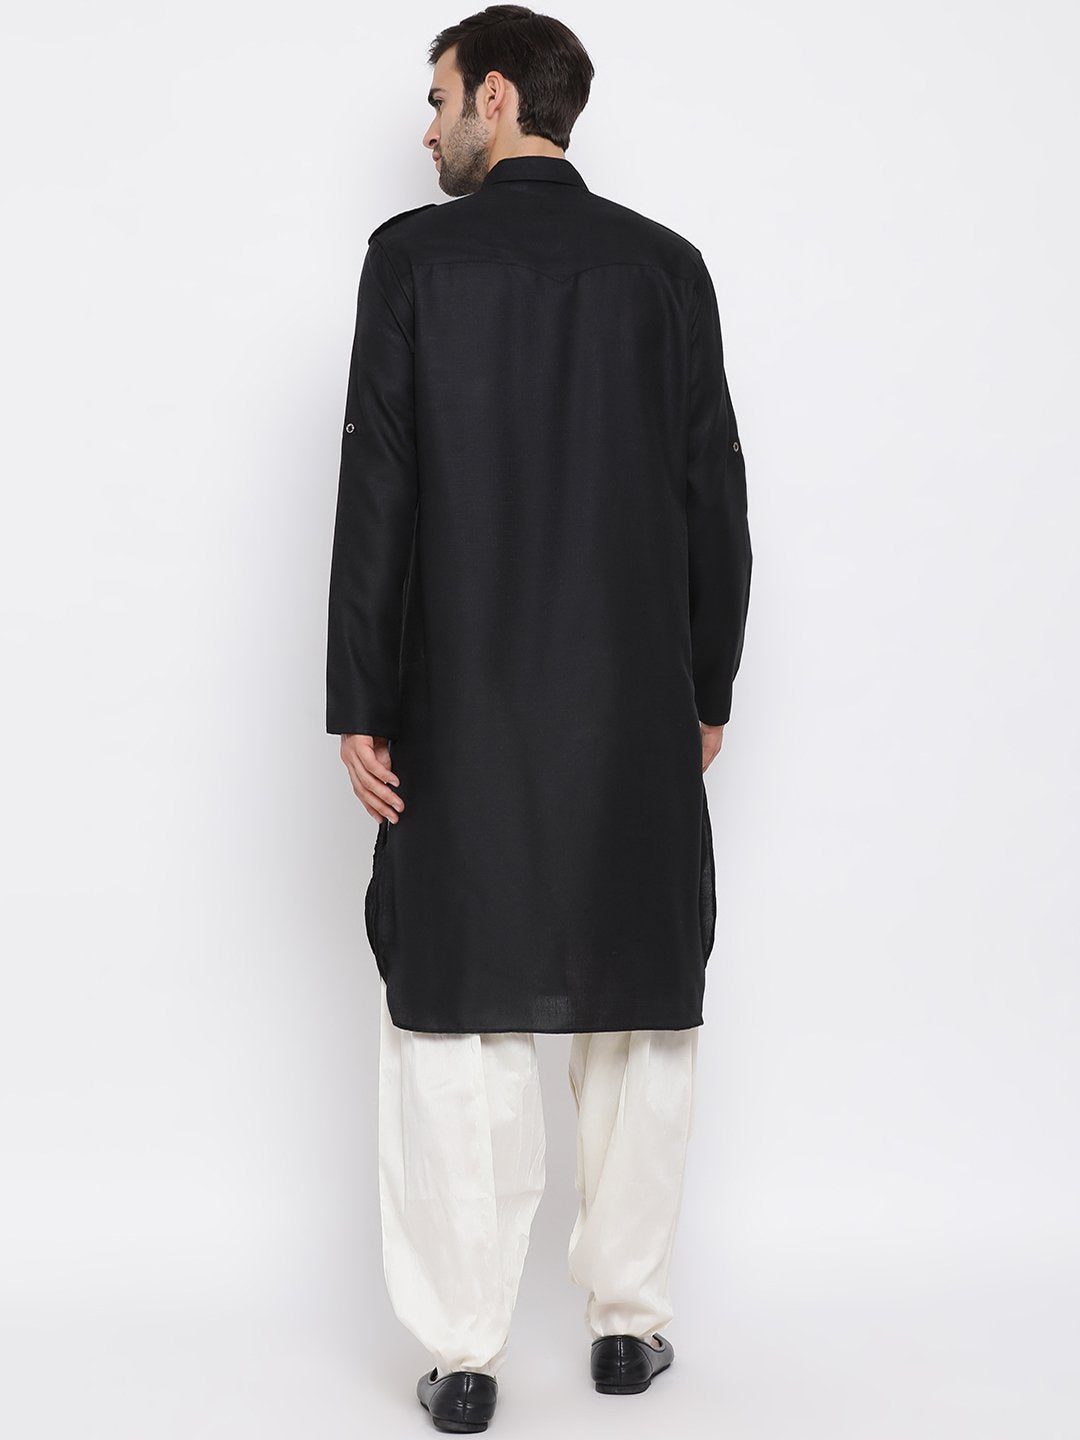 Men's Black Cotton Blend Pathani Suit Set - Vastramay